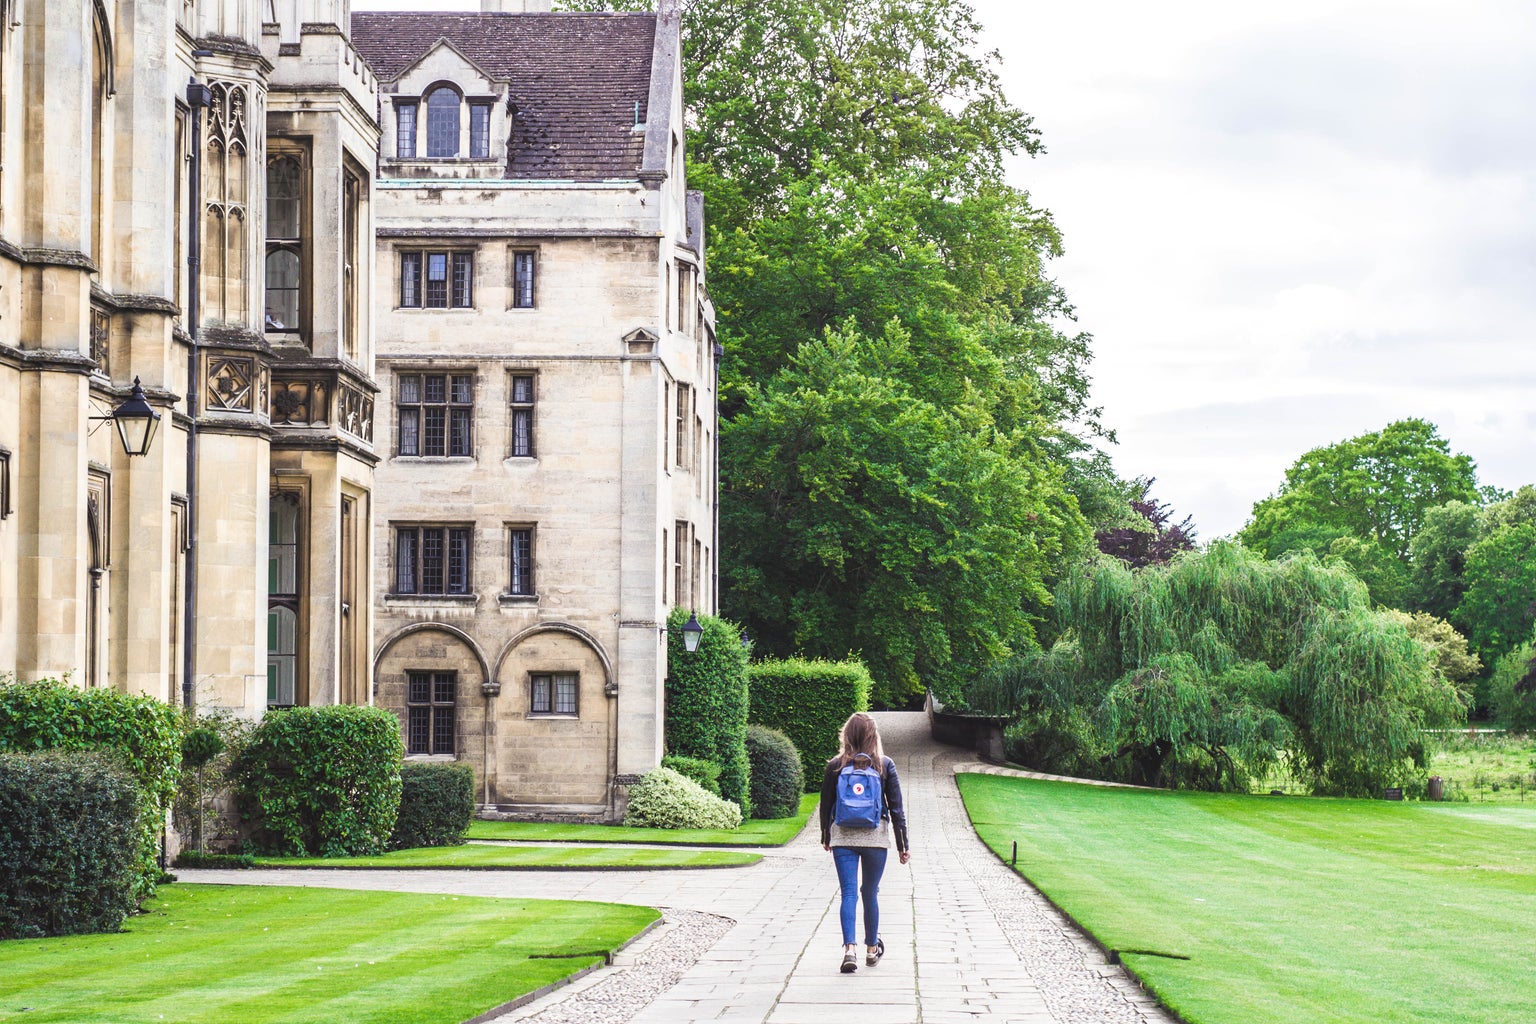 Woman walking on college campus Cambridge